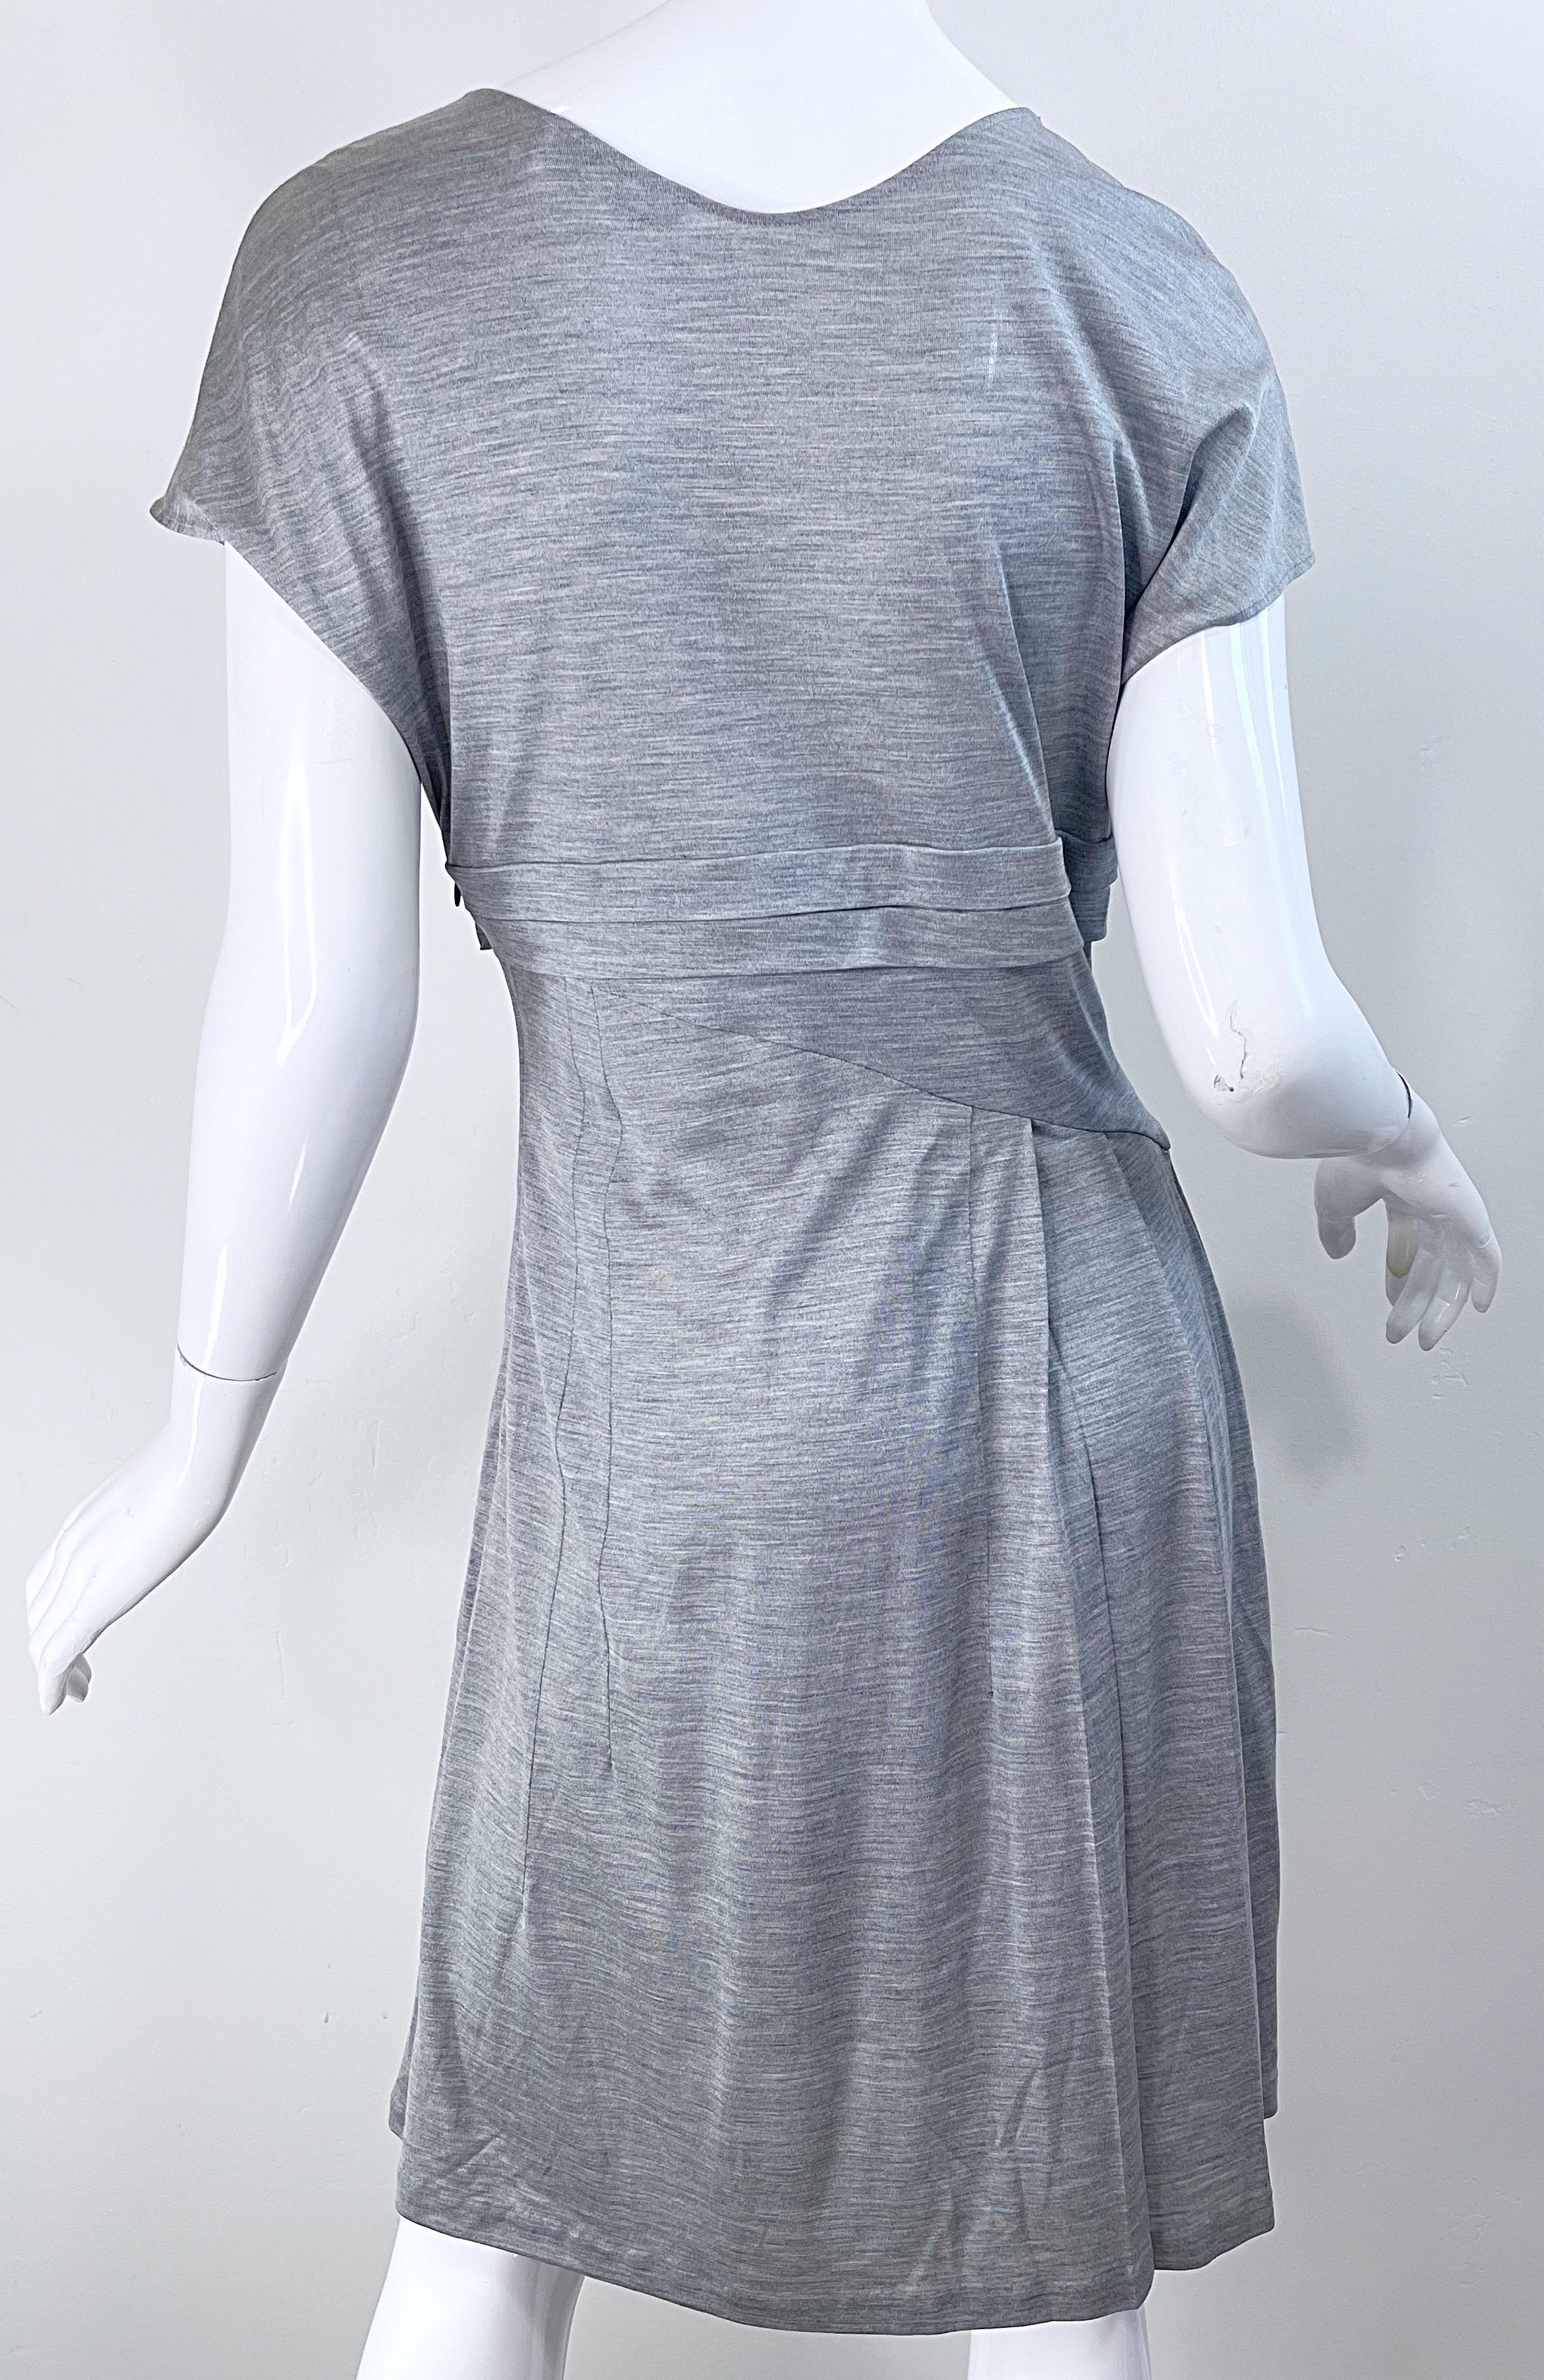 Christian Dior by John Galliano Spring 2007 Size 8 Grey Silk Short Sleeve Dress 1